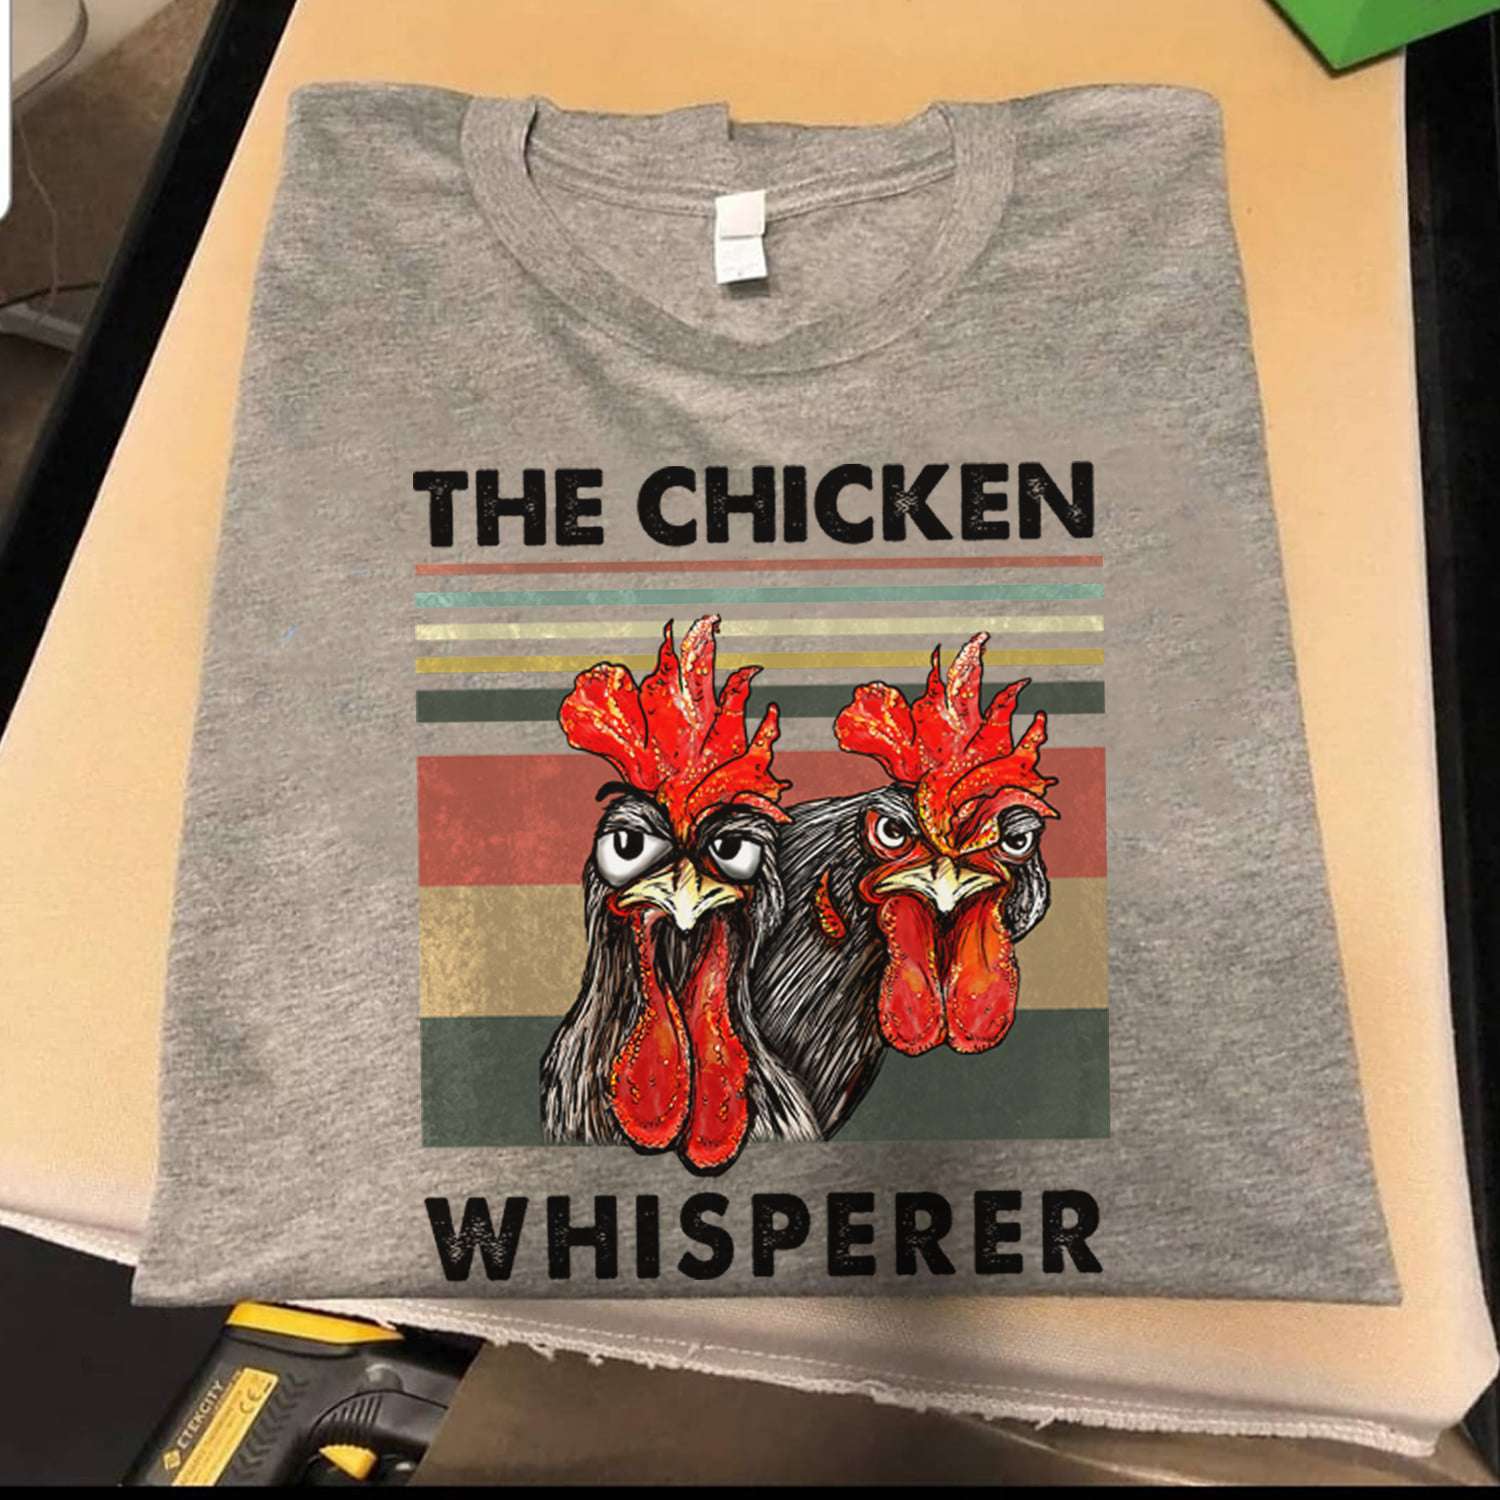 The chicken whisperer - Chicken peckers, grumpy animal